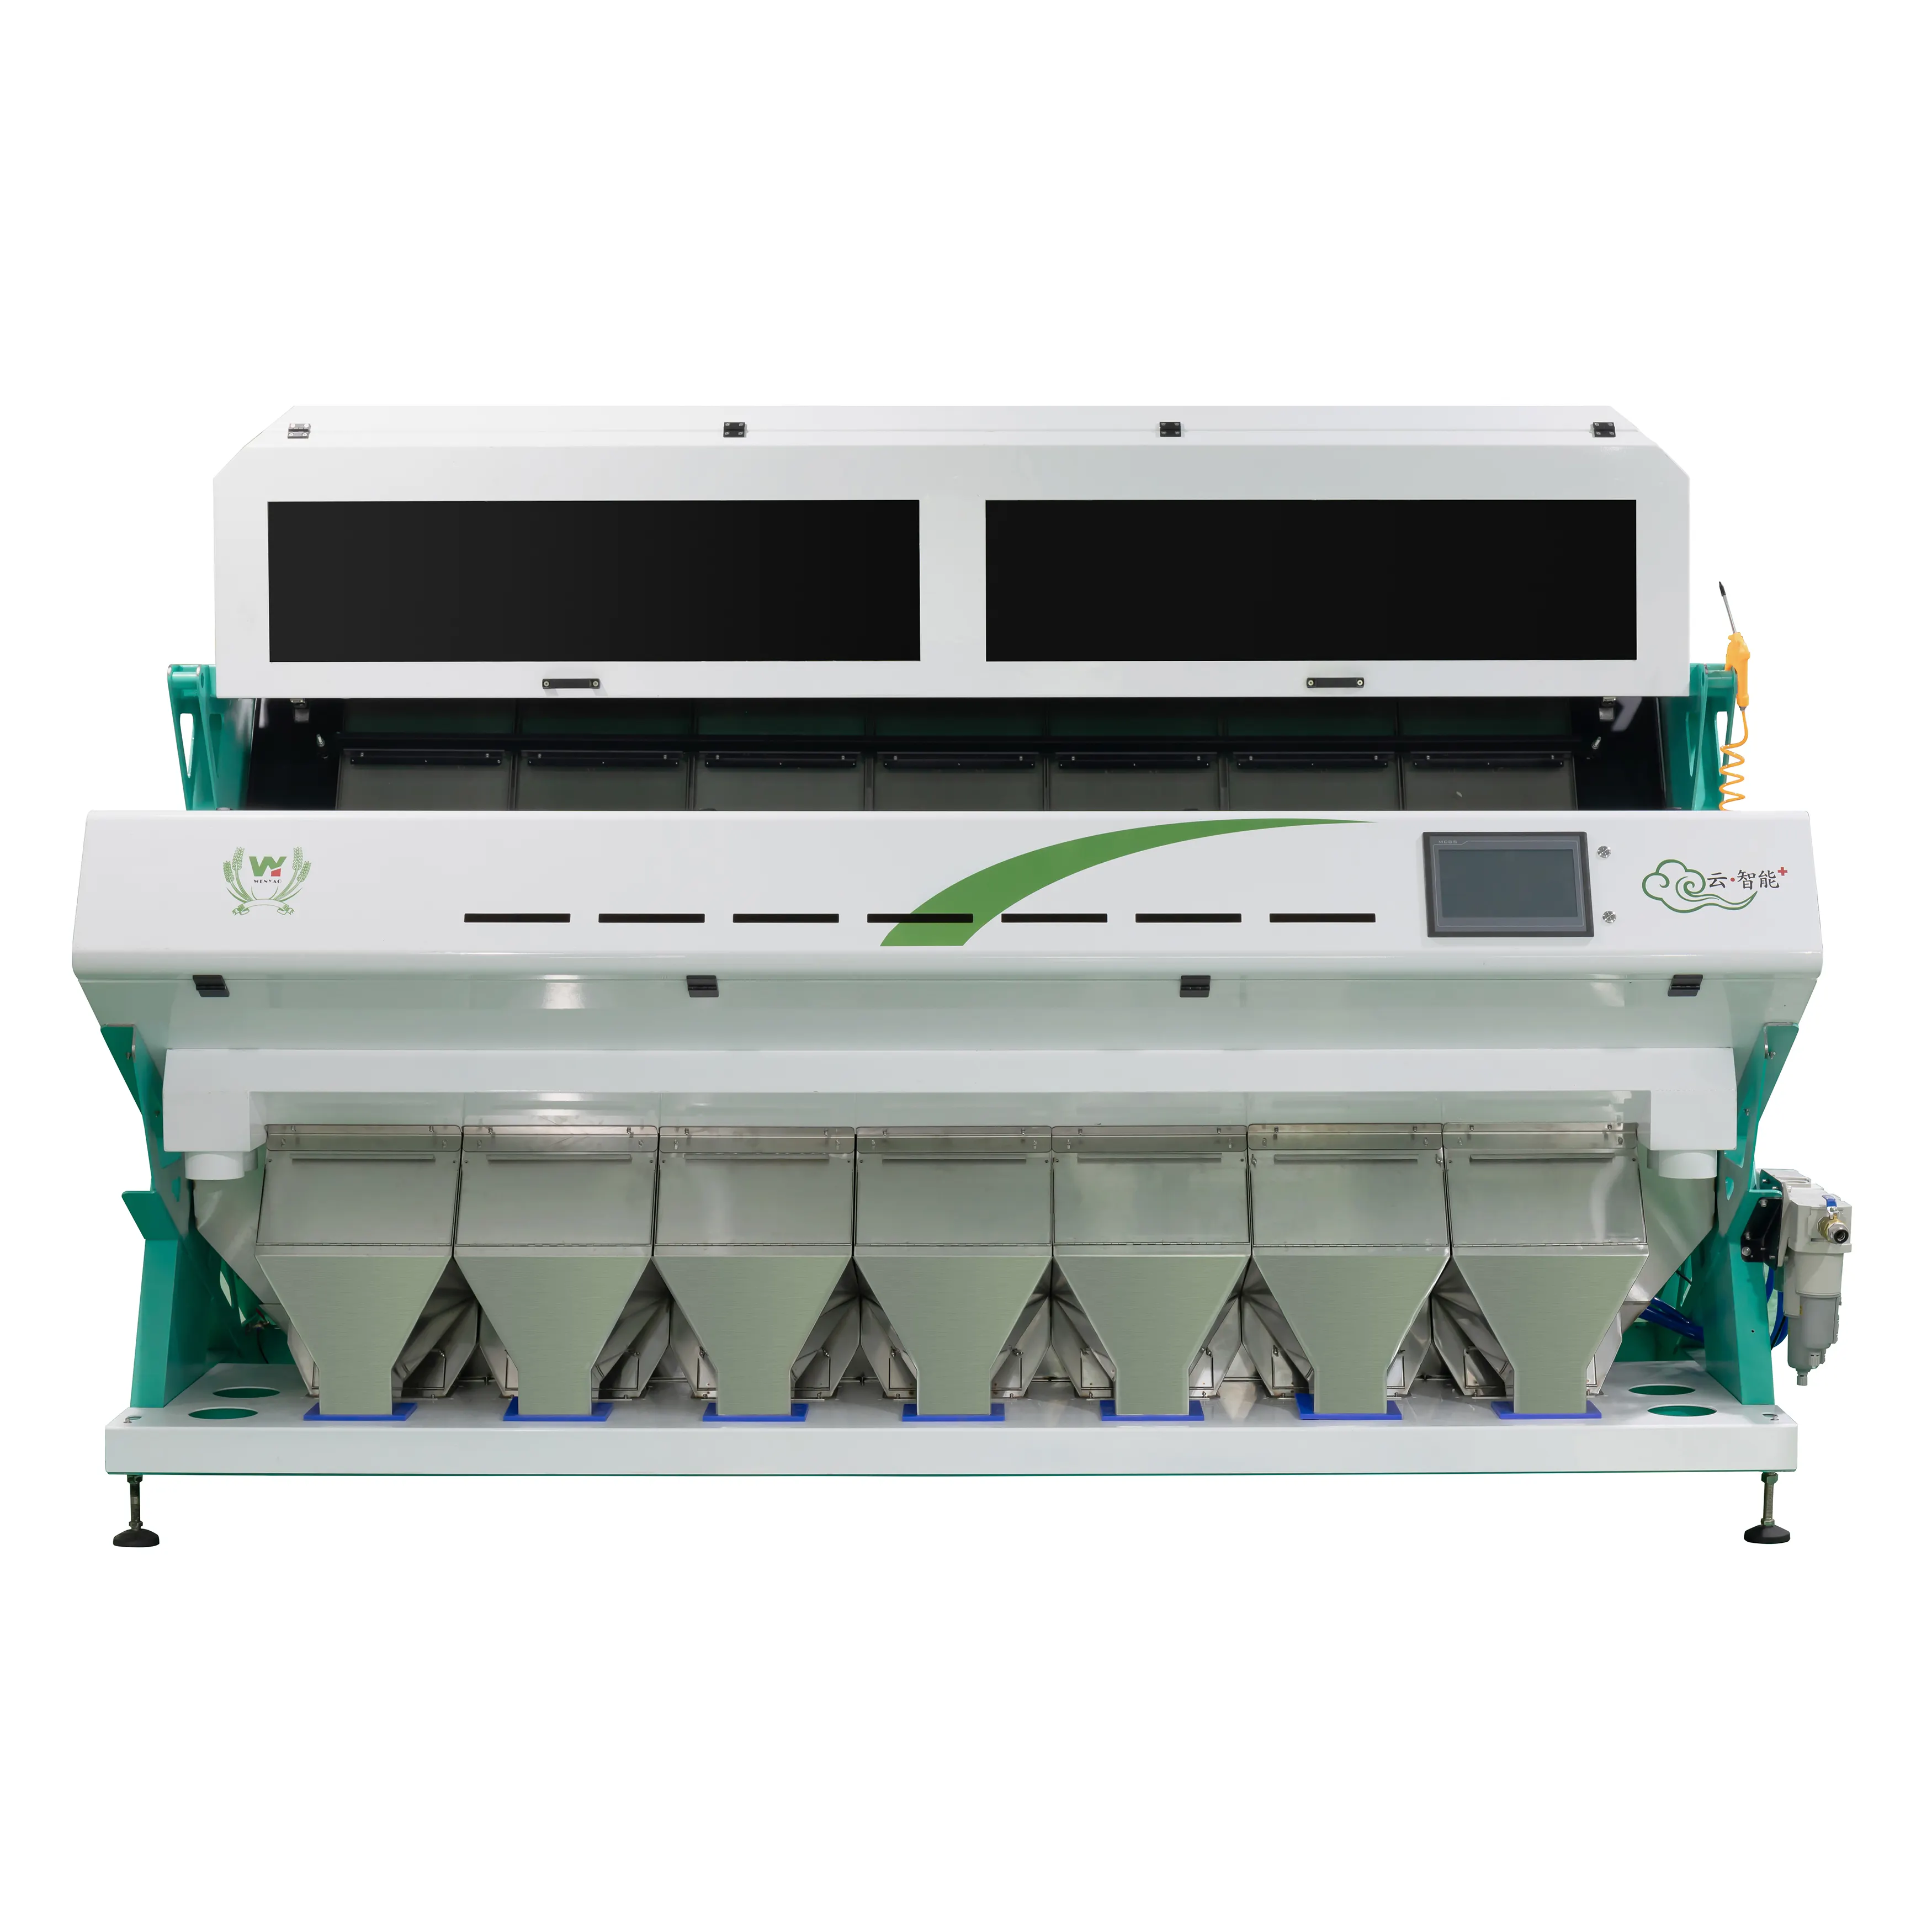 PET color sorter machine plastic colour sorting machine WENYAO brand 7 chutes high capacity